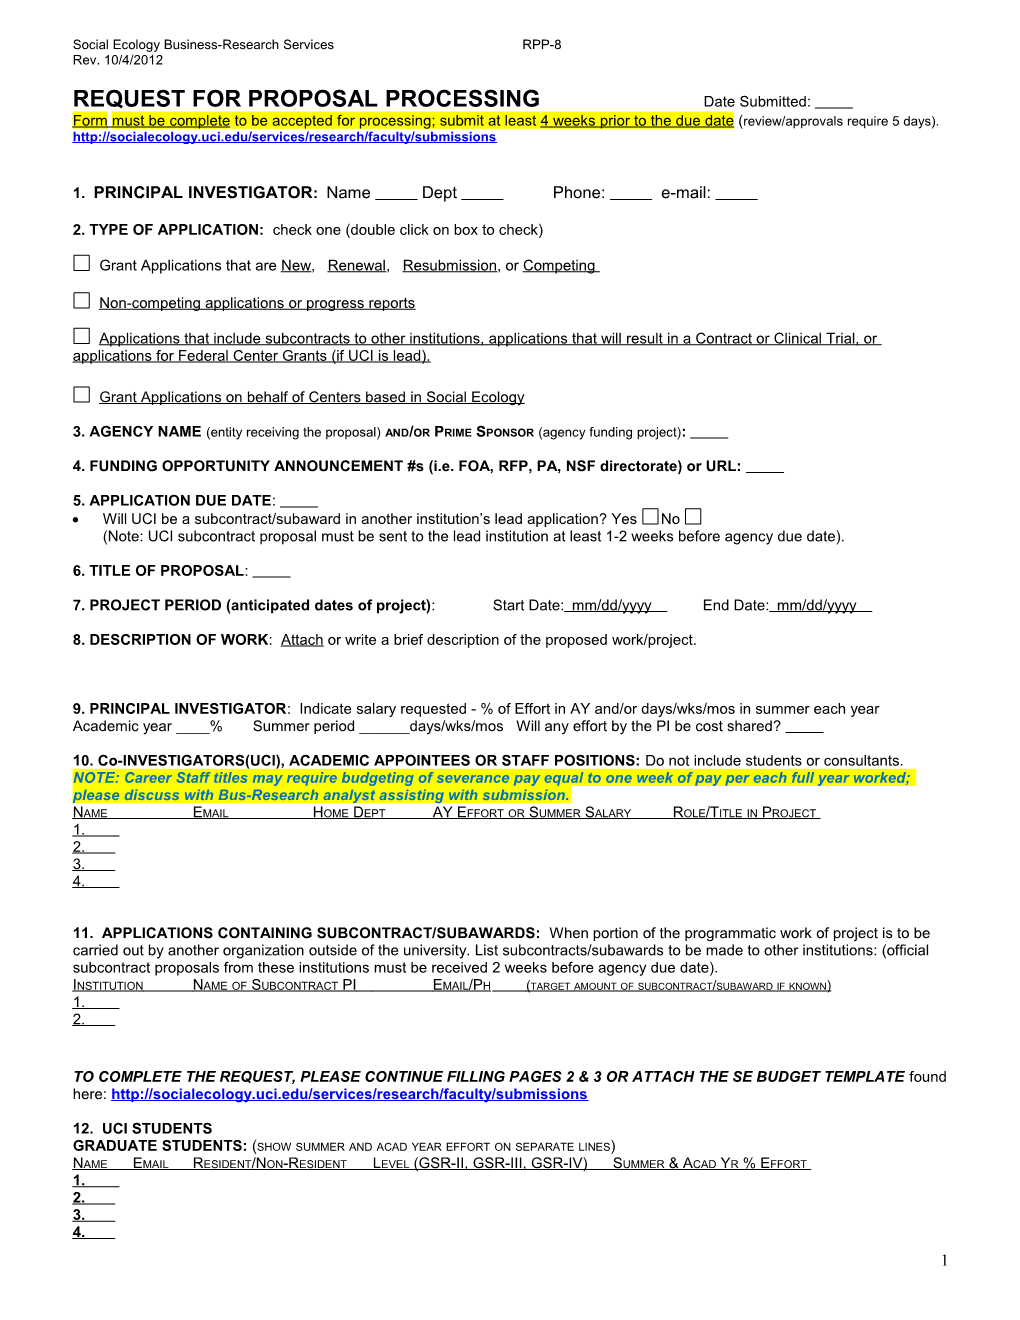 Checklist Proposal Processing Form